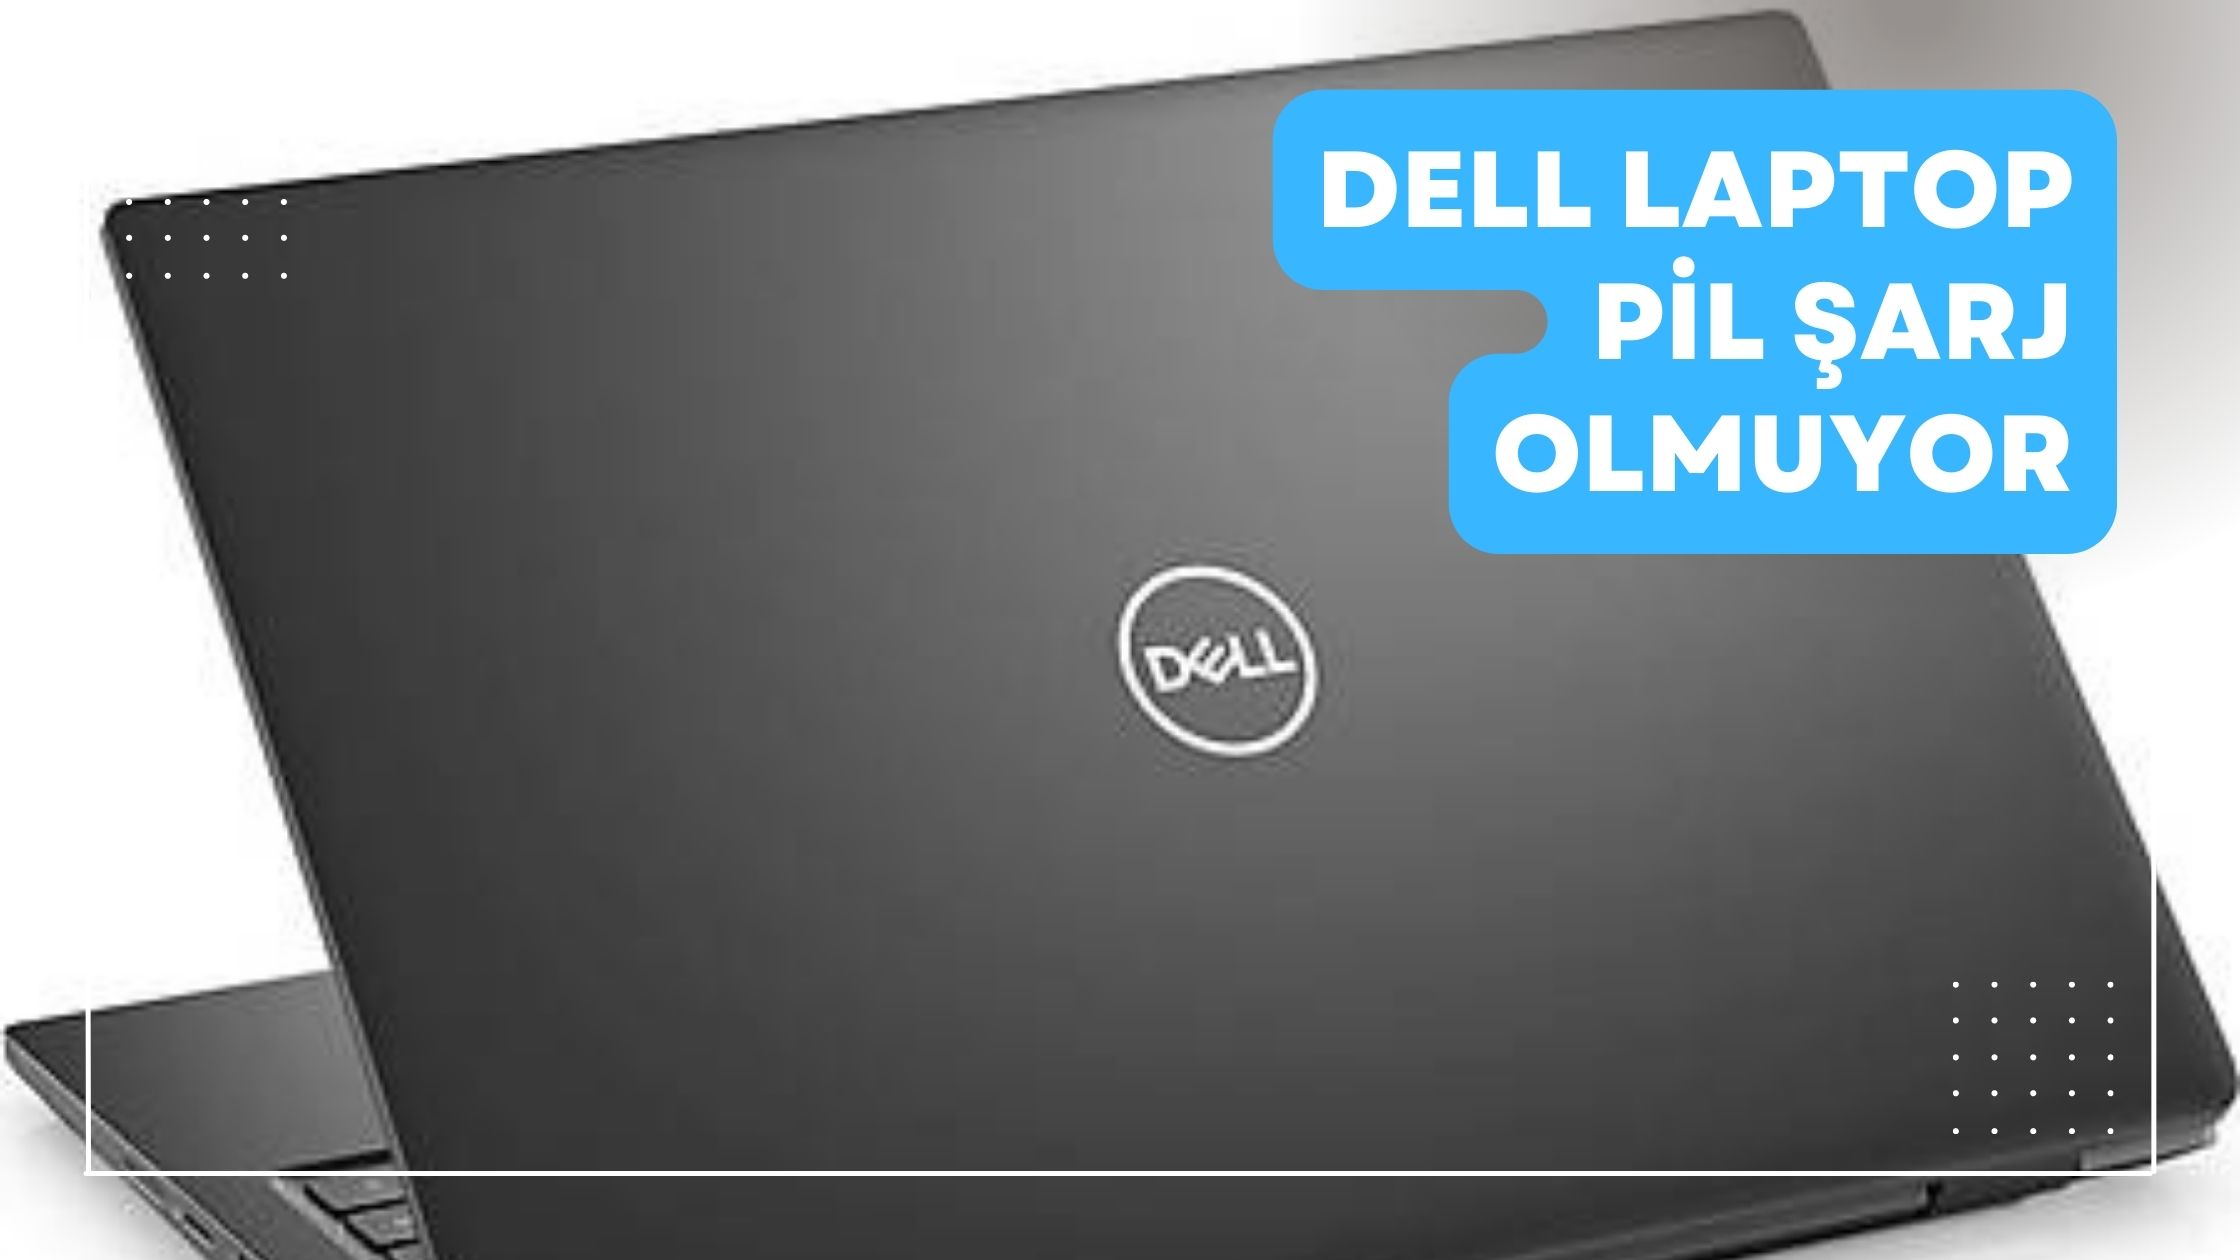 Dell Laptop Pil Şarj Olmuyor